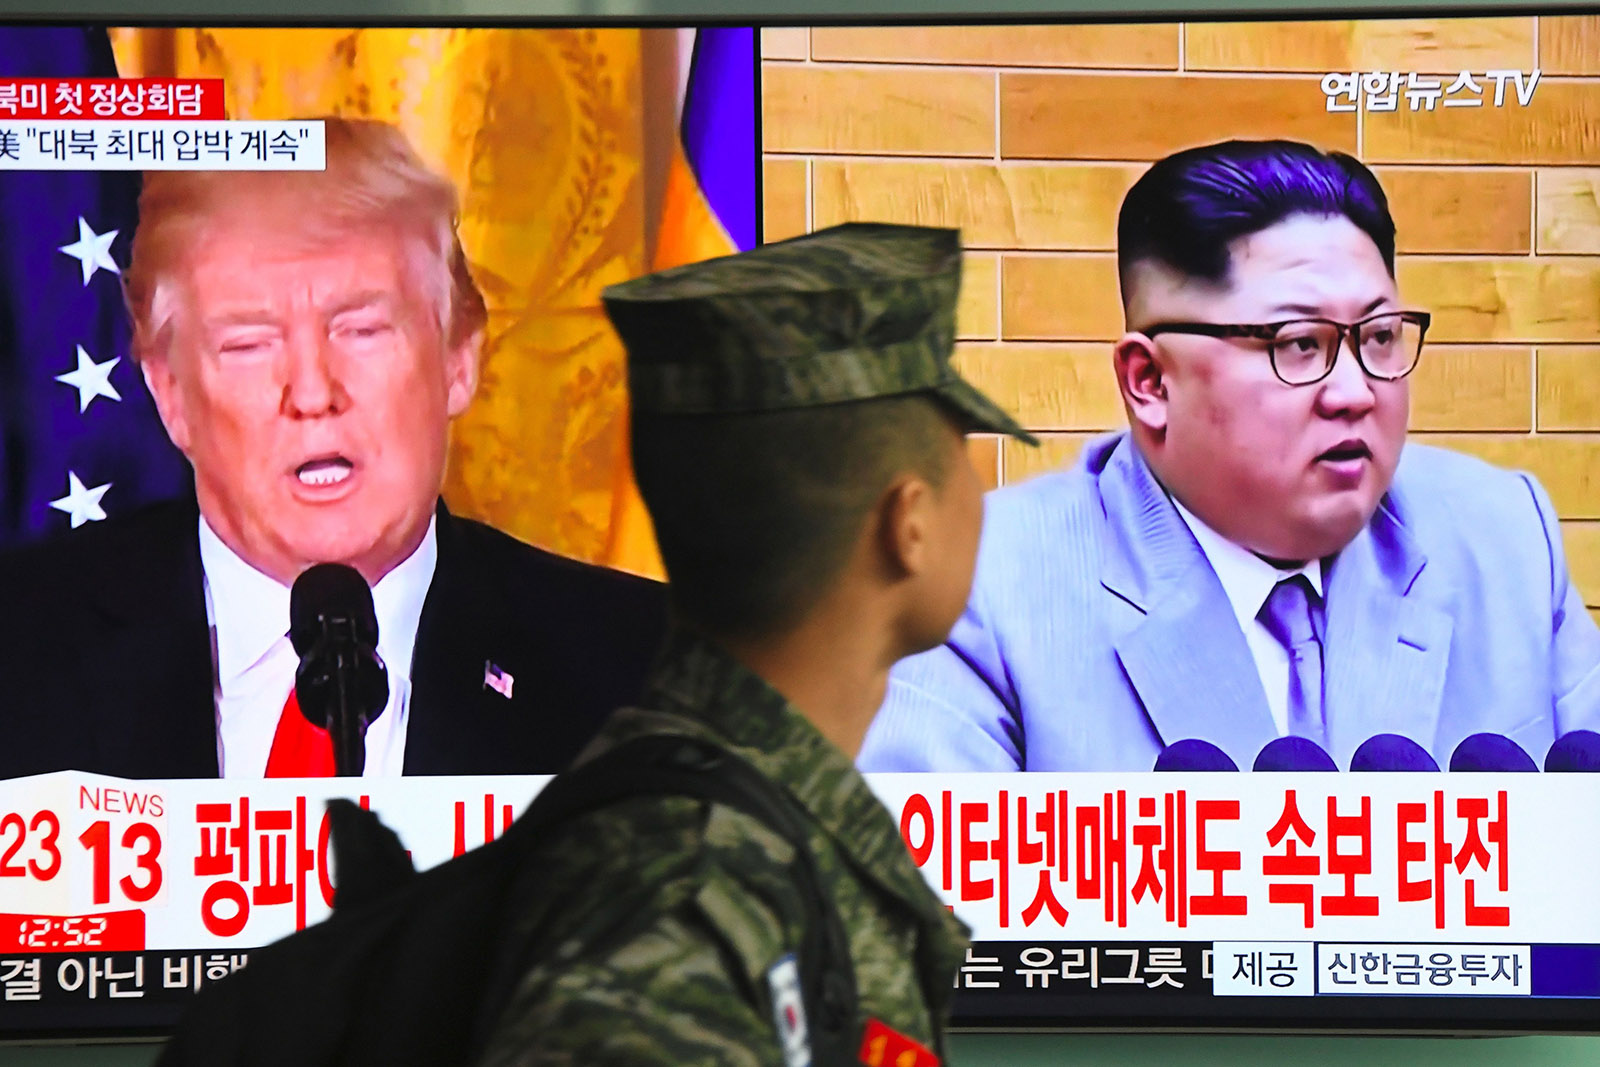 Aiming for a Nuke-Free Korea